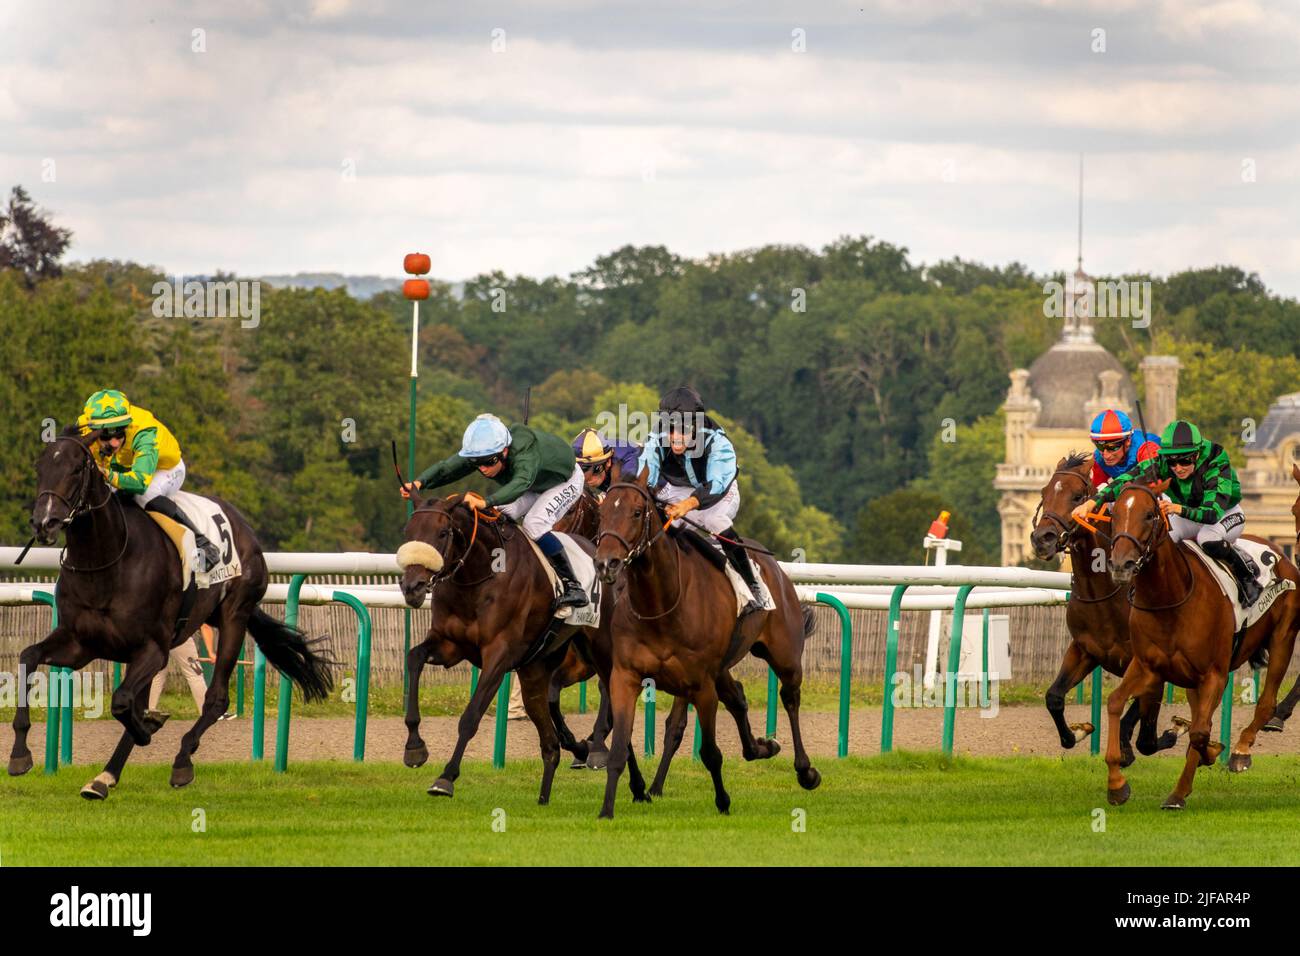 Horse race near the castle of Chantilly, France. Stock Photo